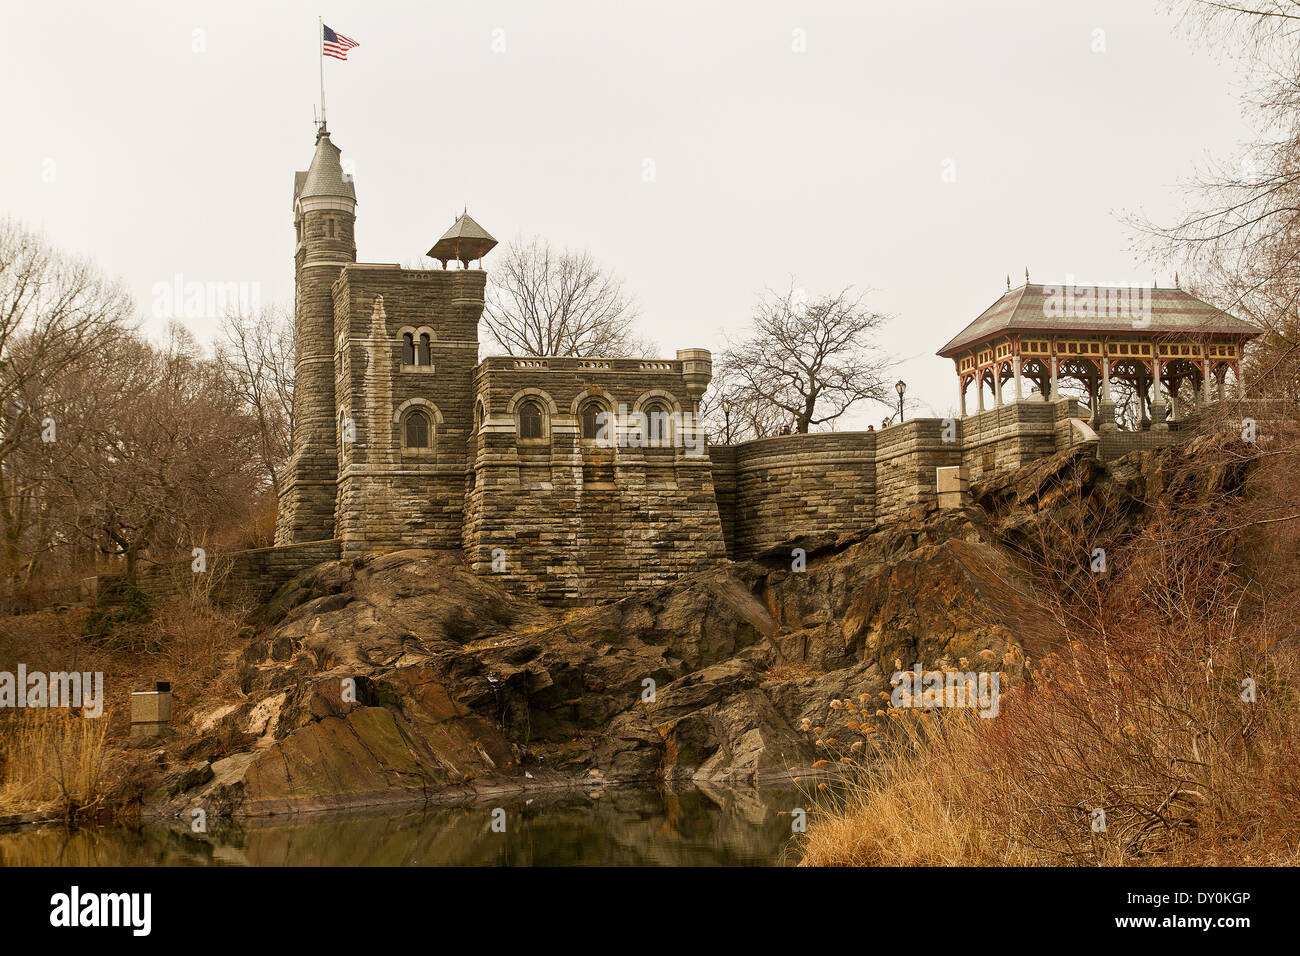 Belvedere Castle in Central Park New York 25.03.2014 Stock Photo - Alamy